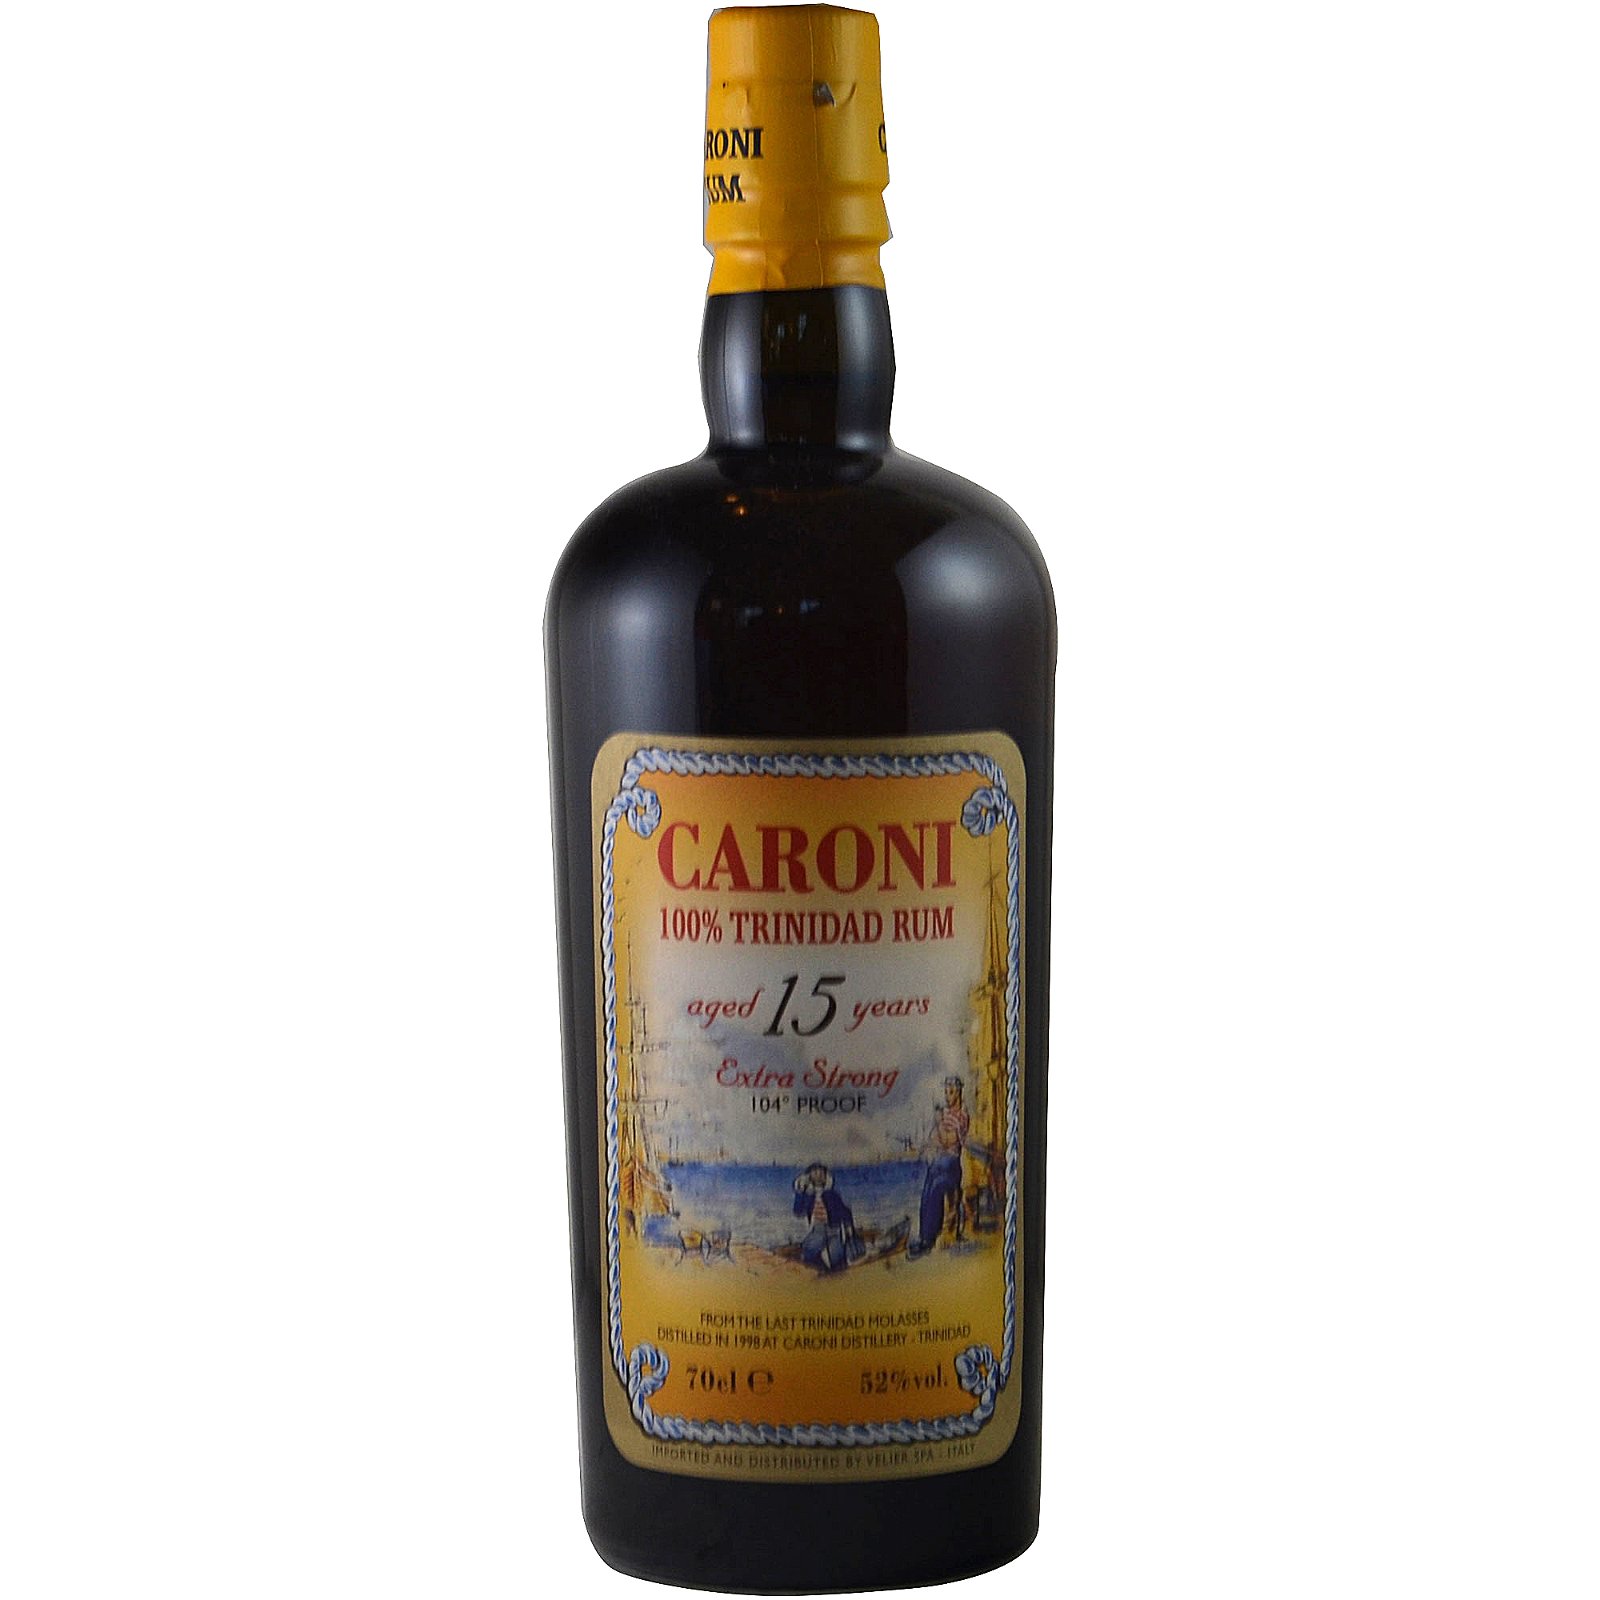 Caroni Trinidad Rum 15 Jahre Extra Strong 104 Proof (Rum) (Trinidad)